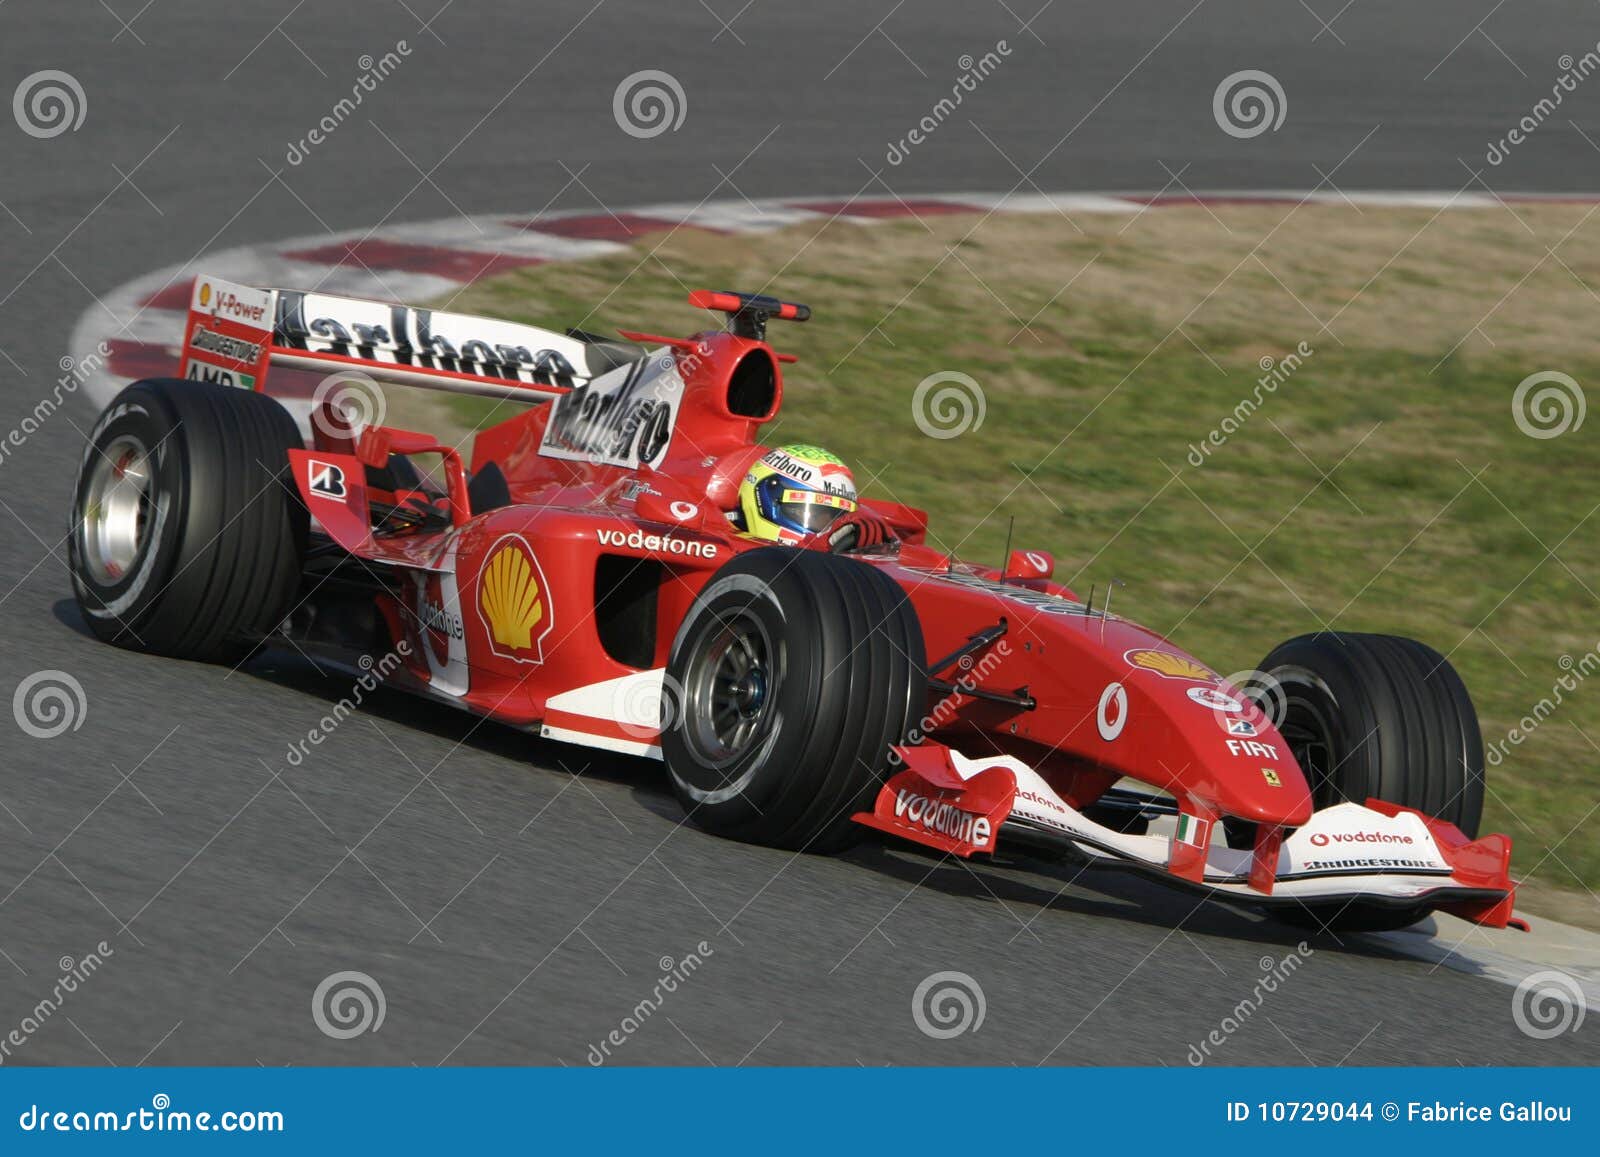 590 Felipe Massa Photos Free Royalty Free Stock Photos From Dreamstime